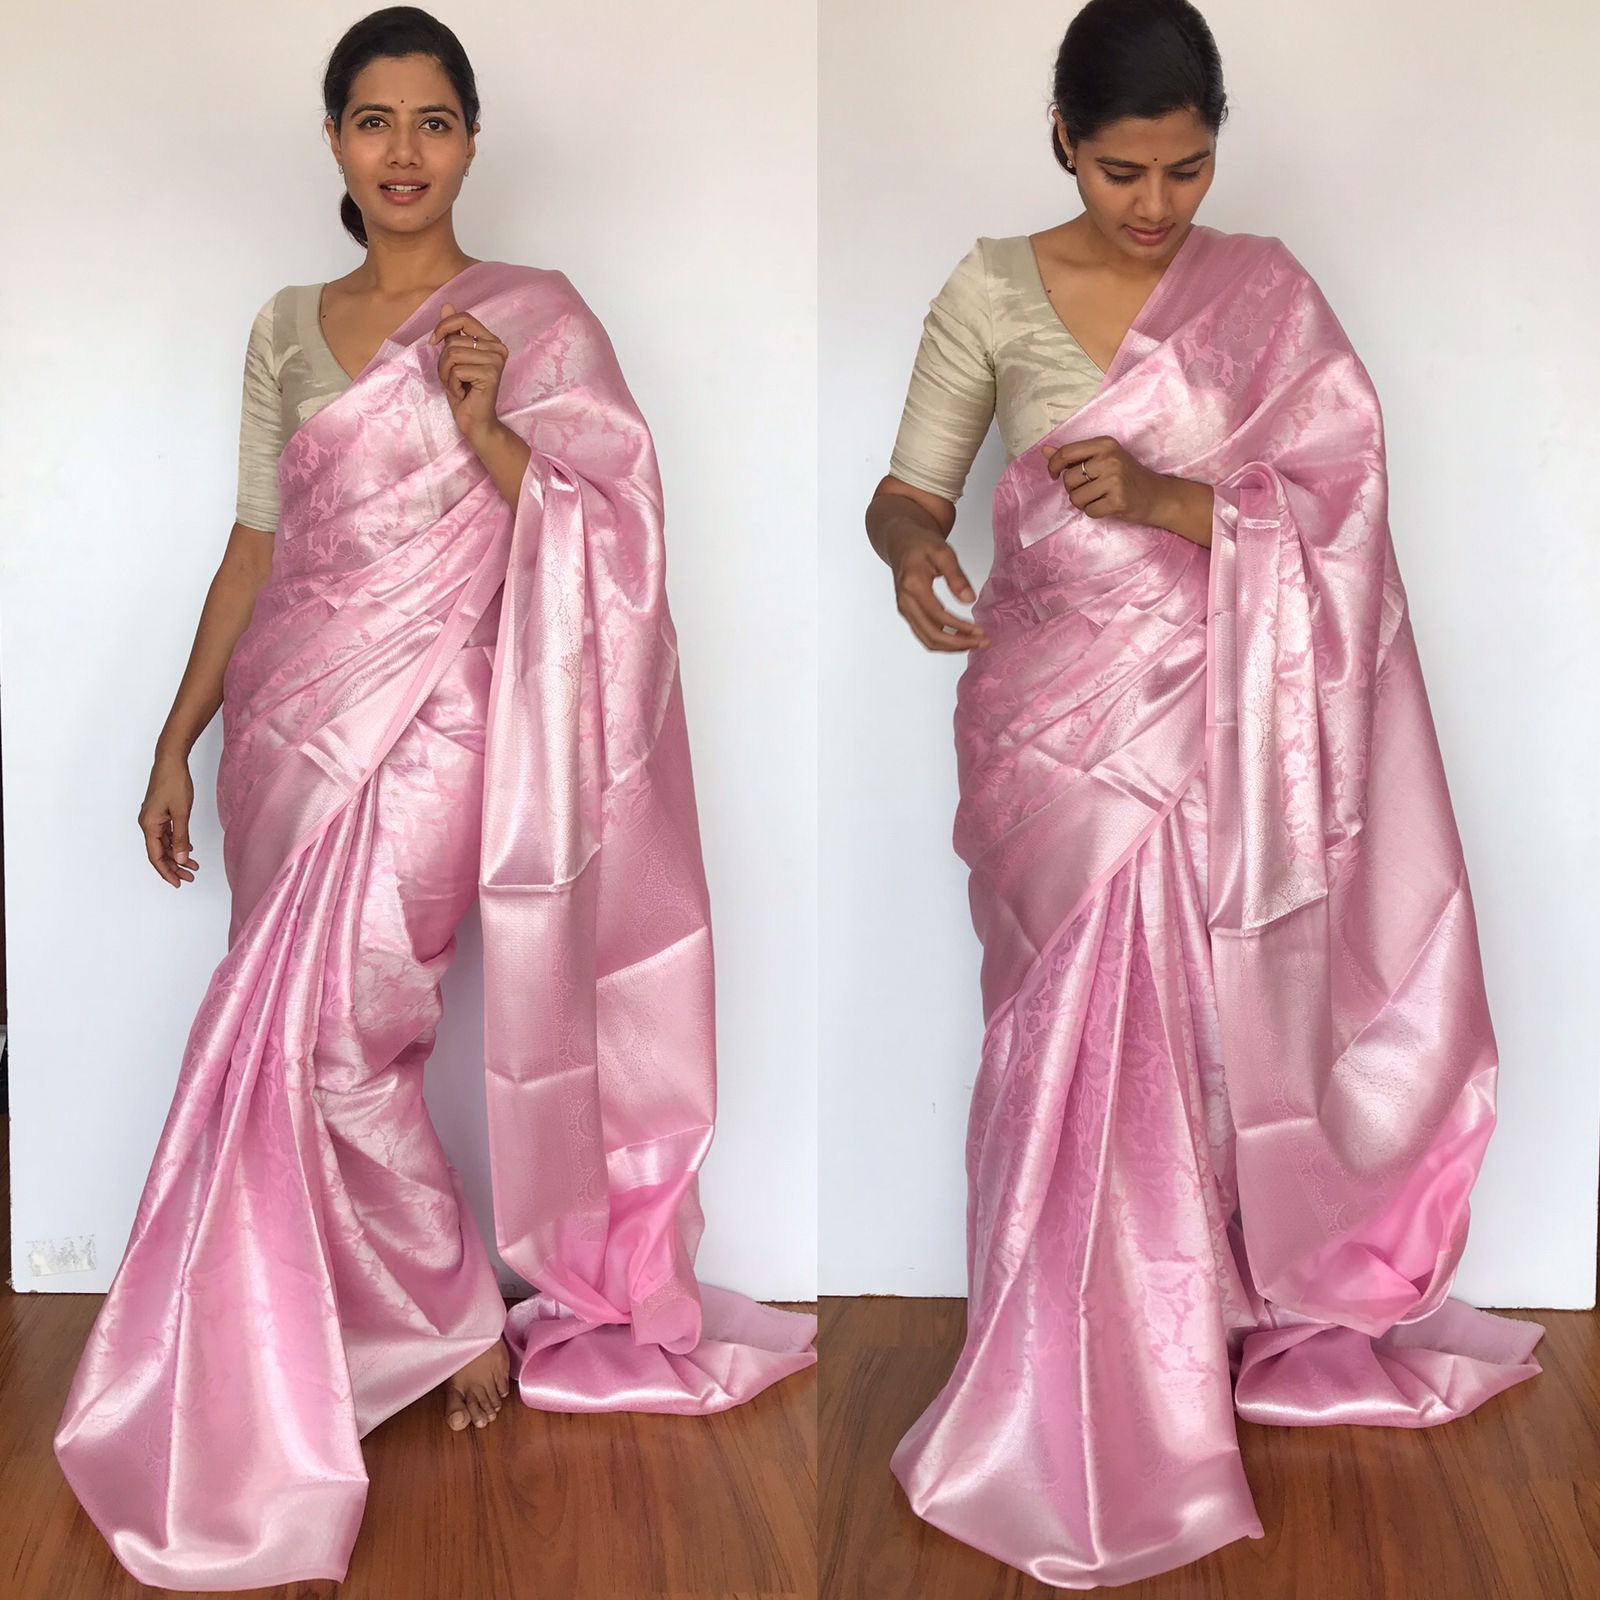 5 Stunning Shades Of Pink Saree